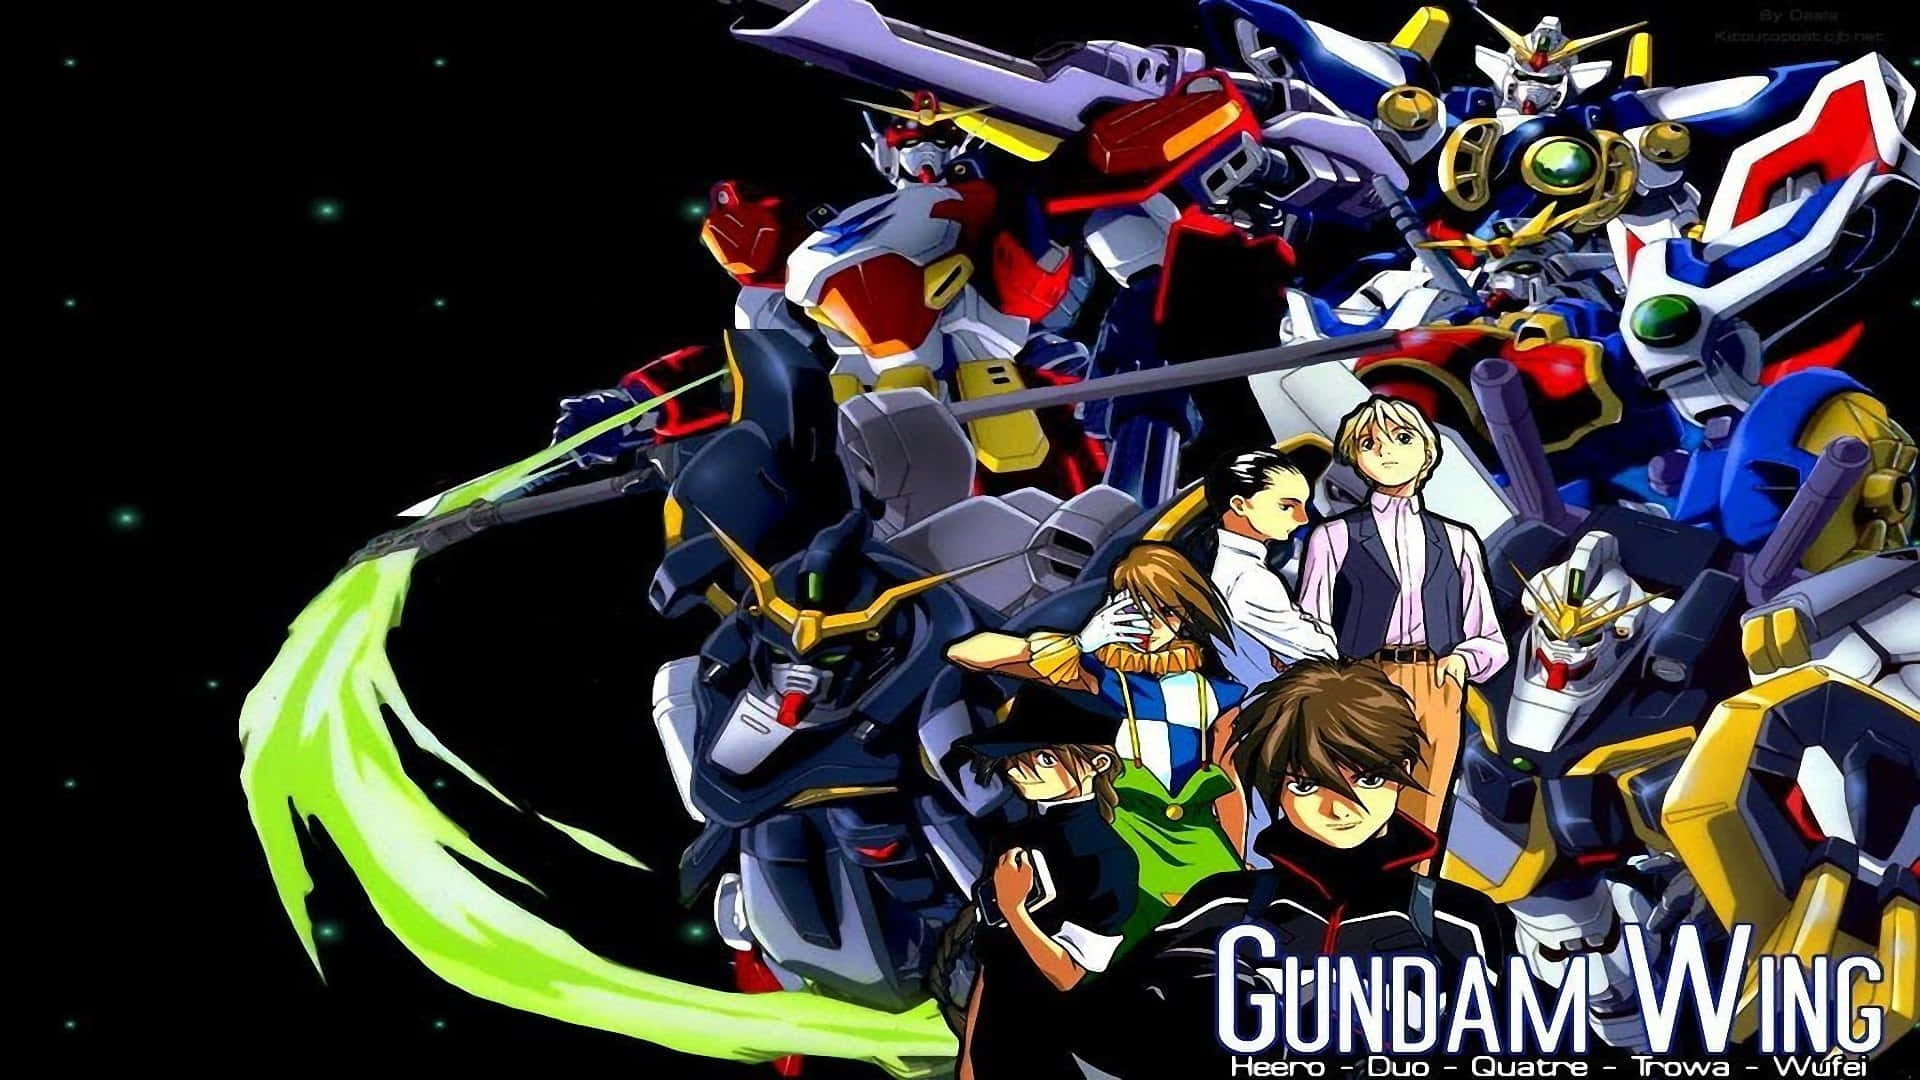 Heero Yuy - Gundam Pilot in Action Wallpaper